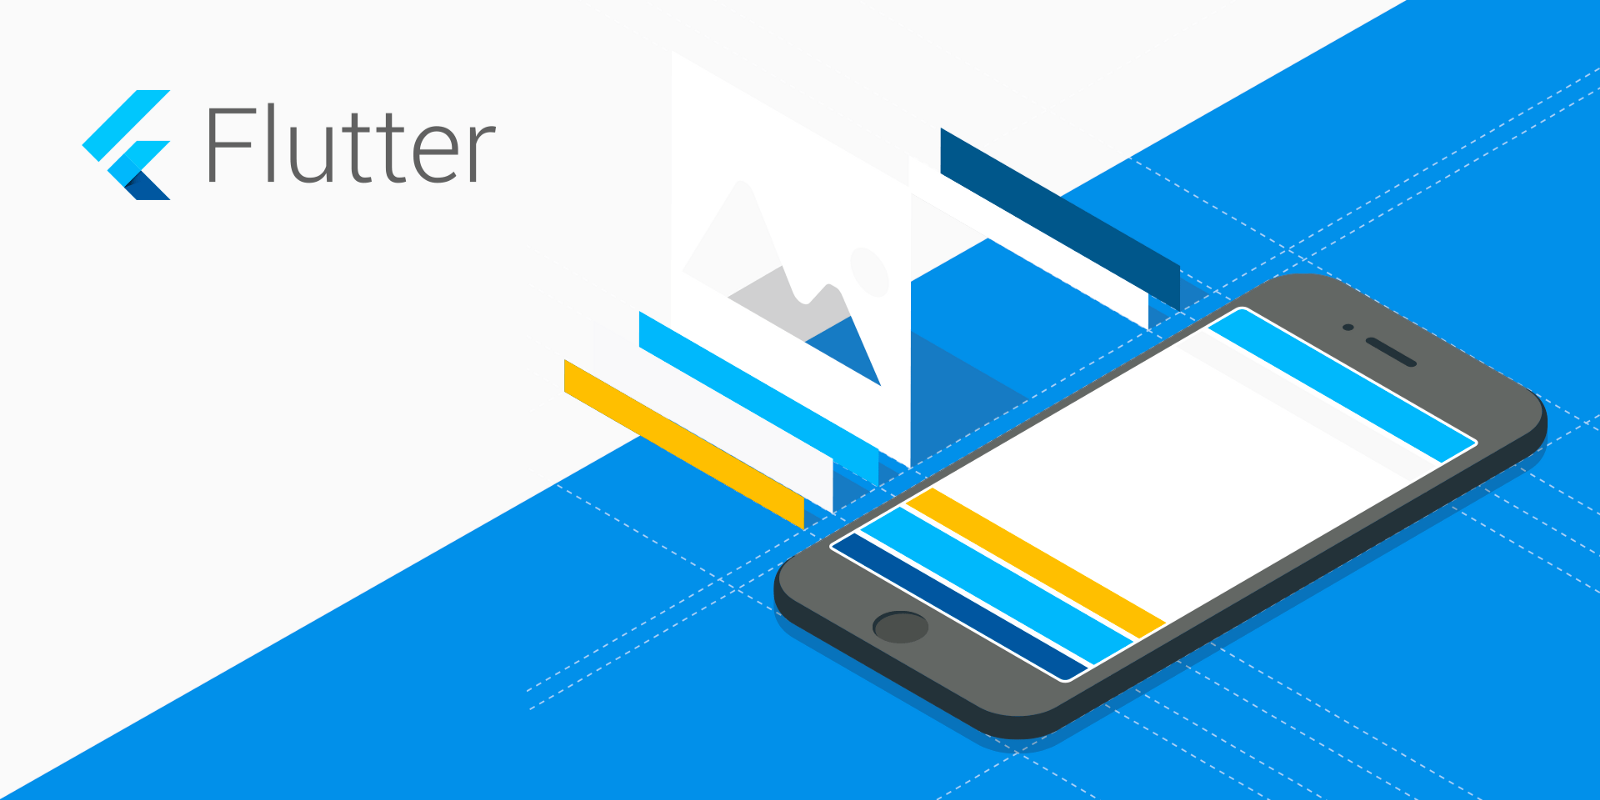 Perfect for mobile development, using Flutter to build cross-platform apps